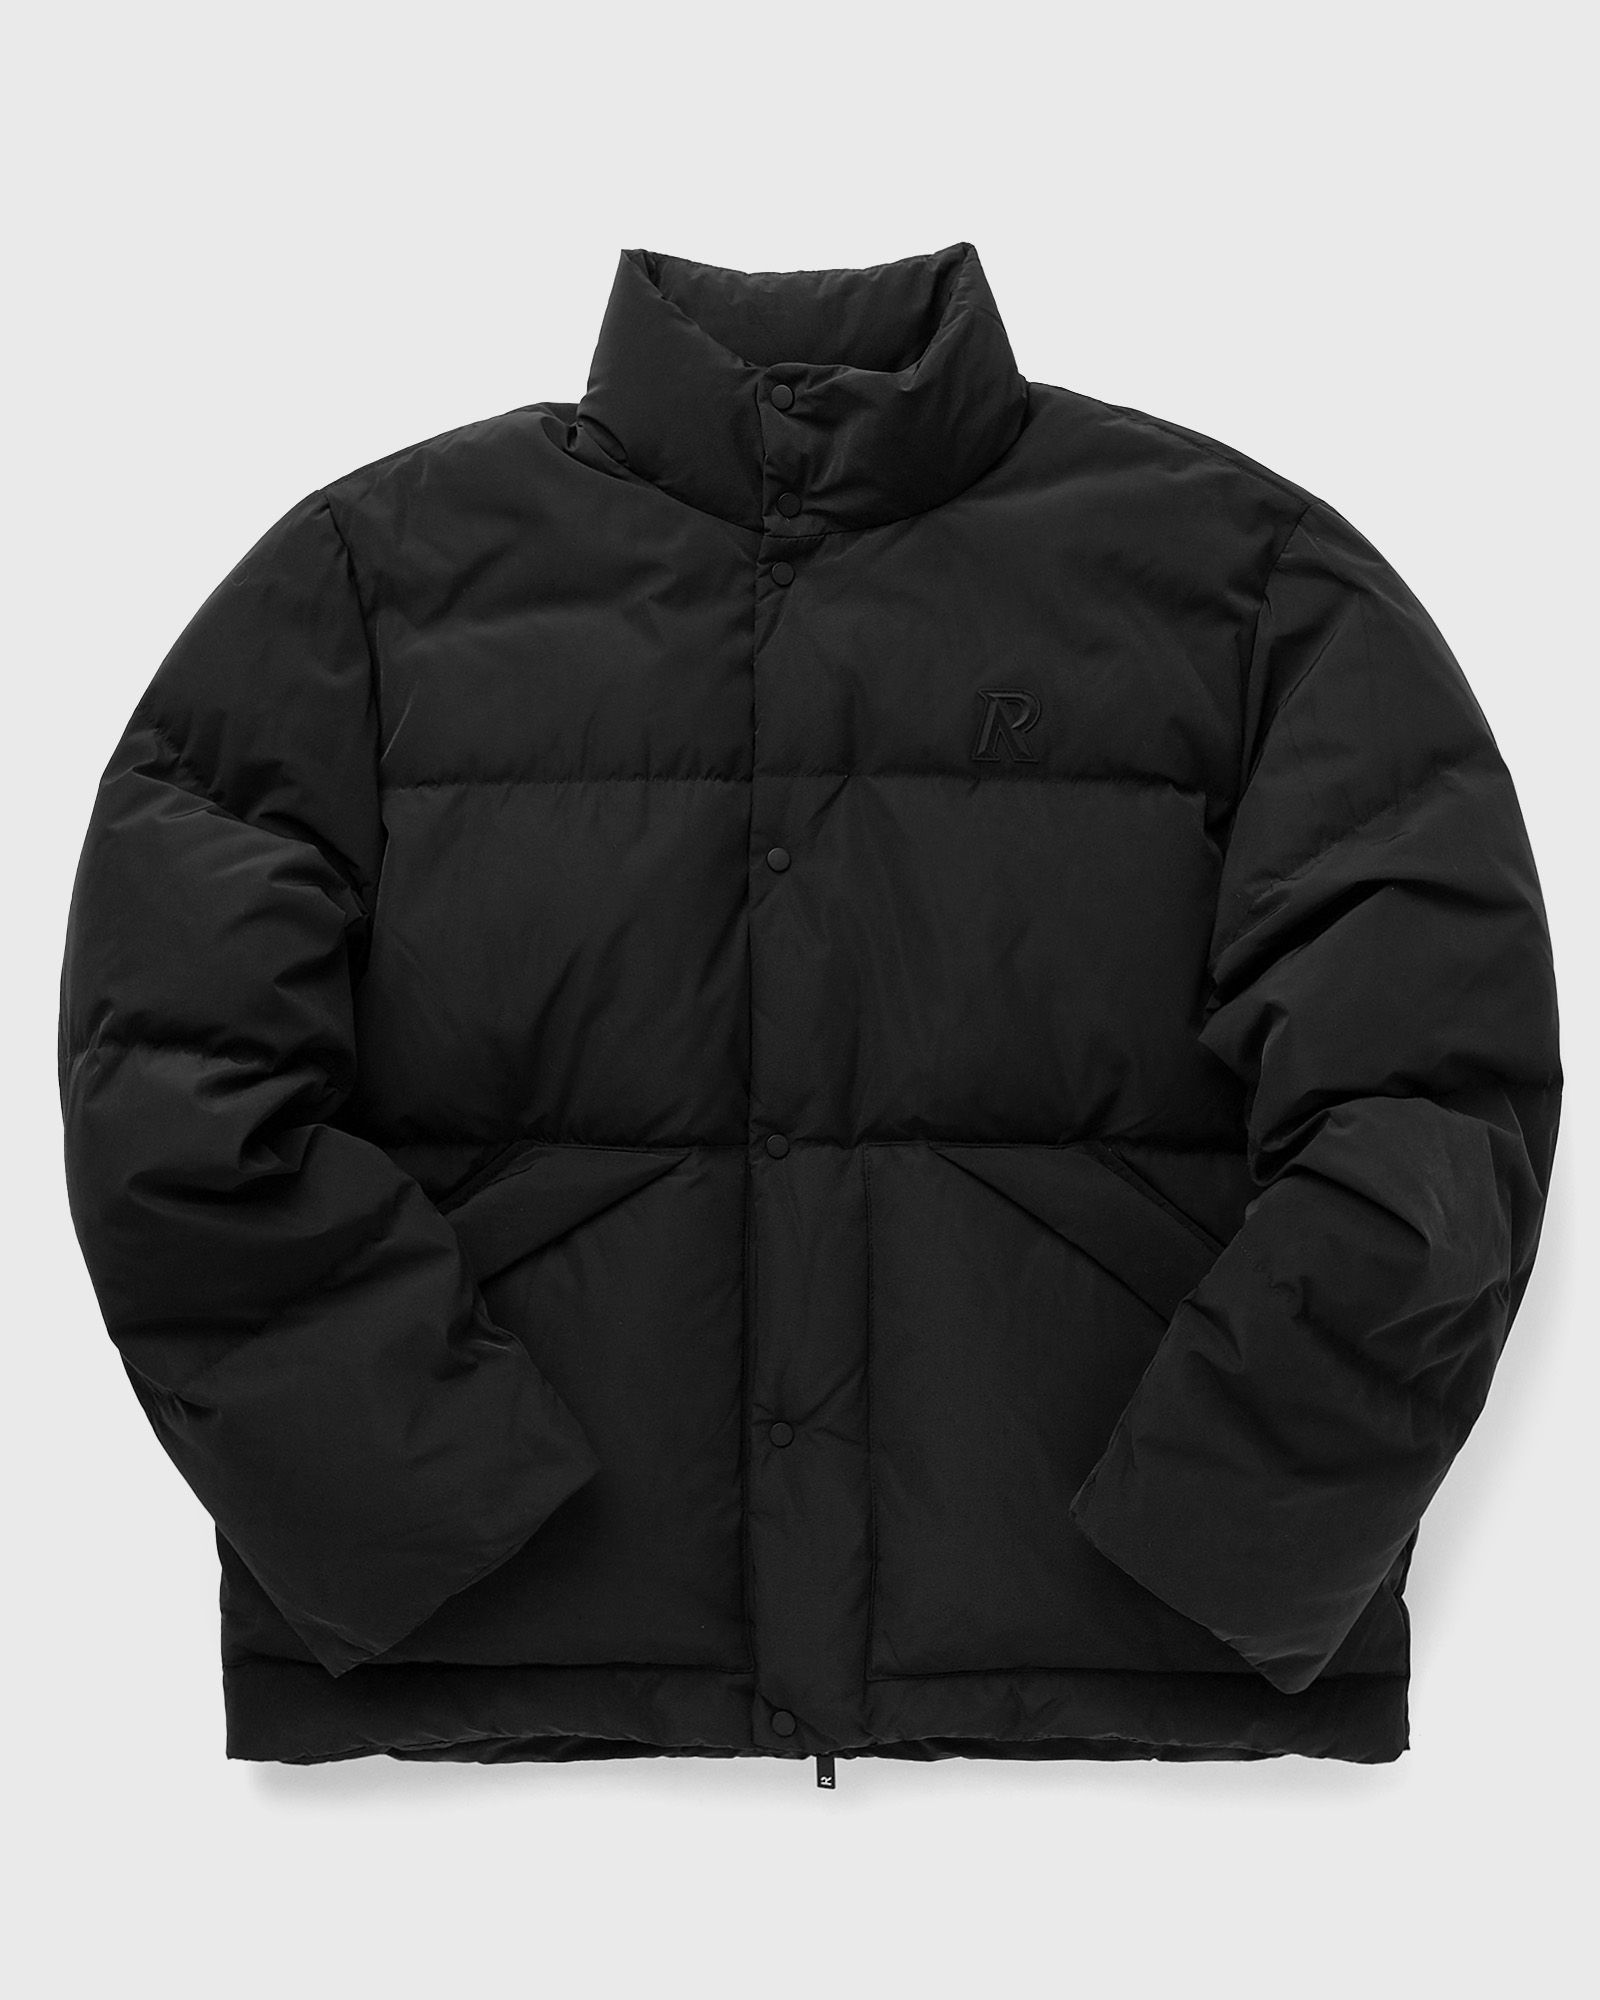 Represent - puffer jacket men down & puffer jackets black in größe:xl